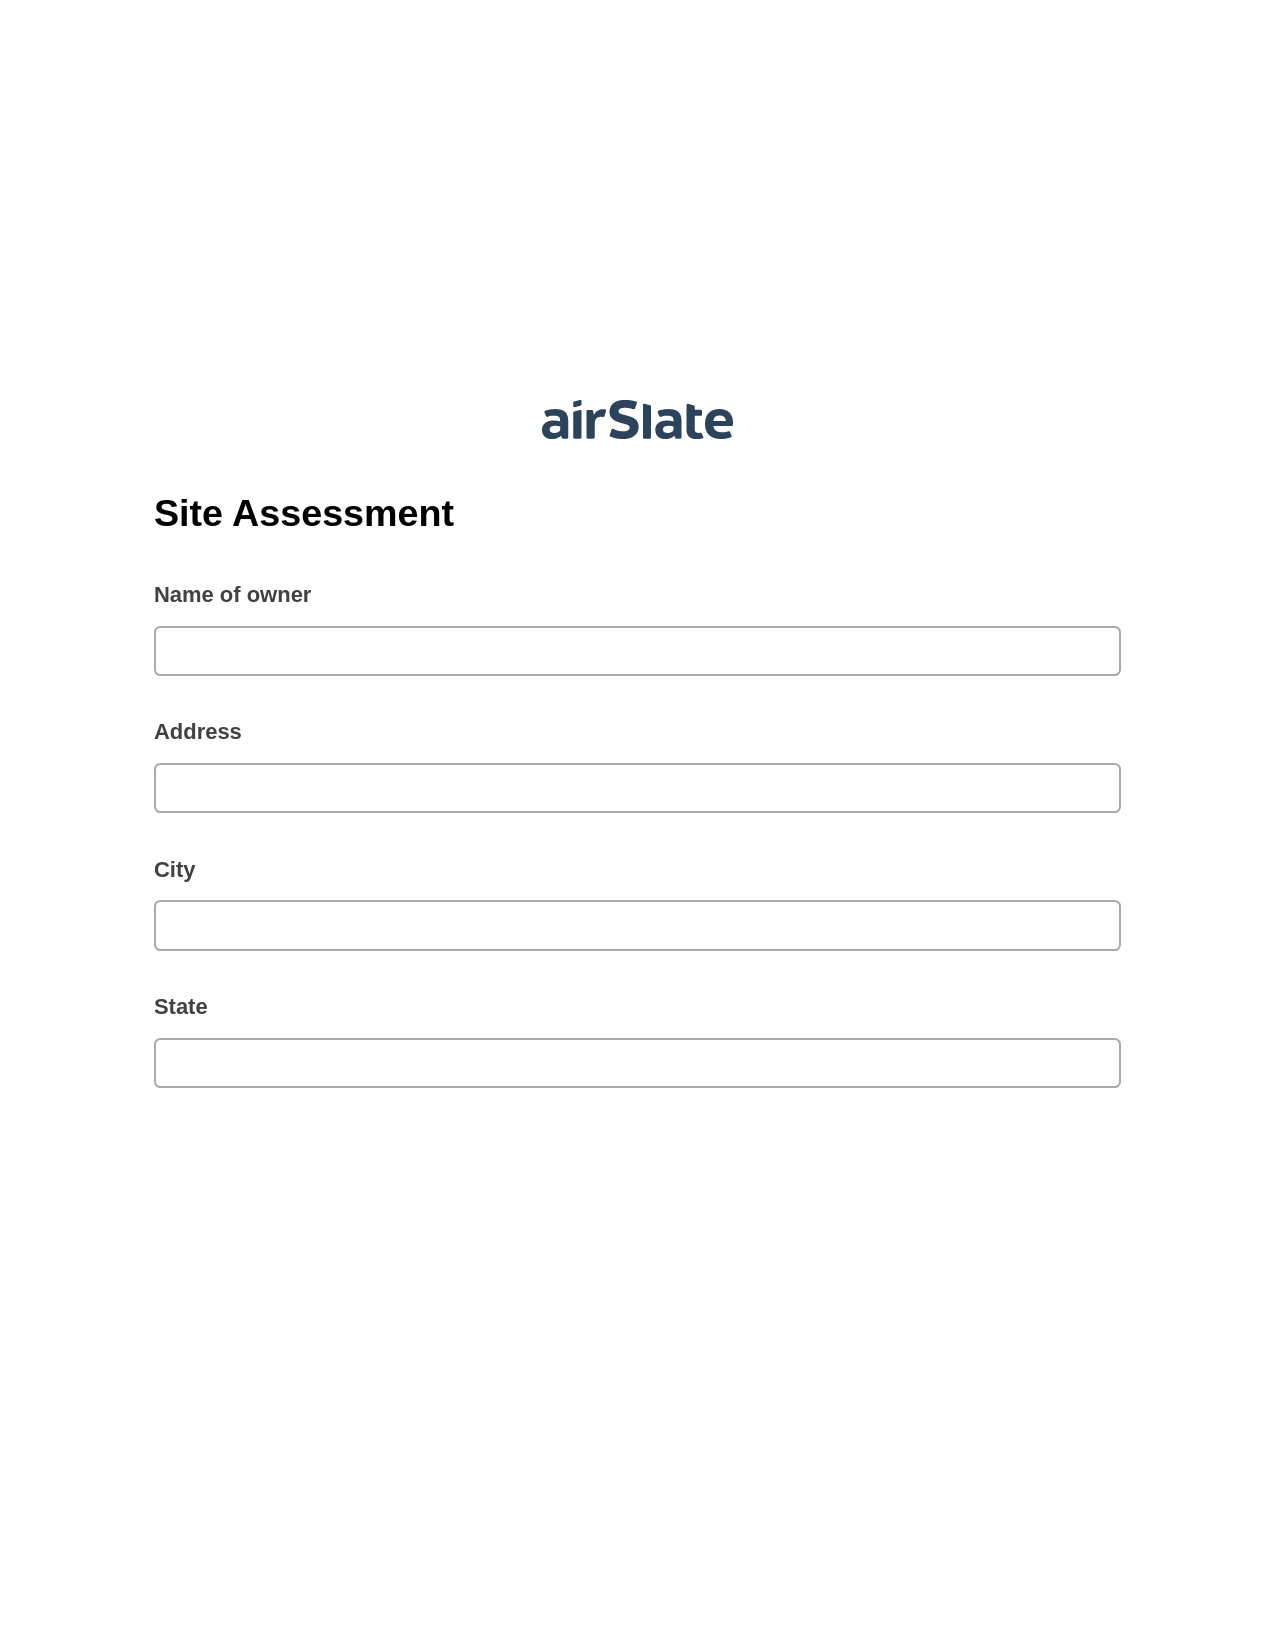 Site Assessment Pre-fill from Smartsheet Bot, Audit Trail Bot, Export to Smartsheet